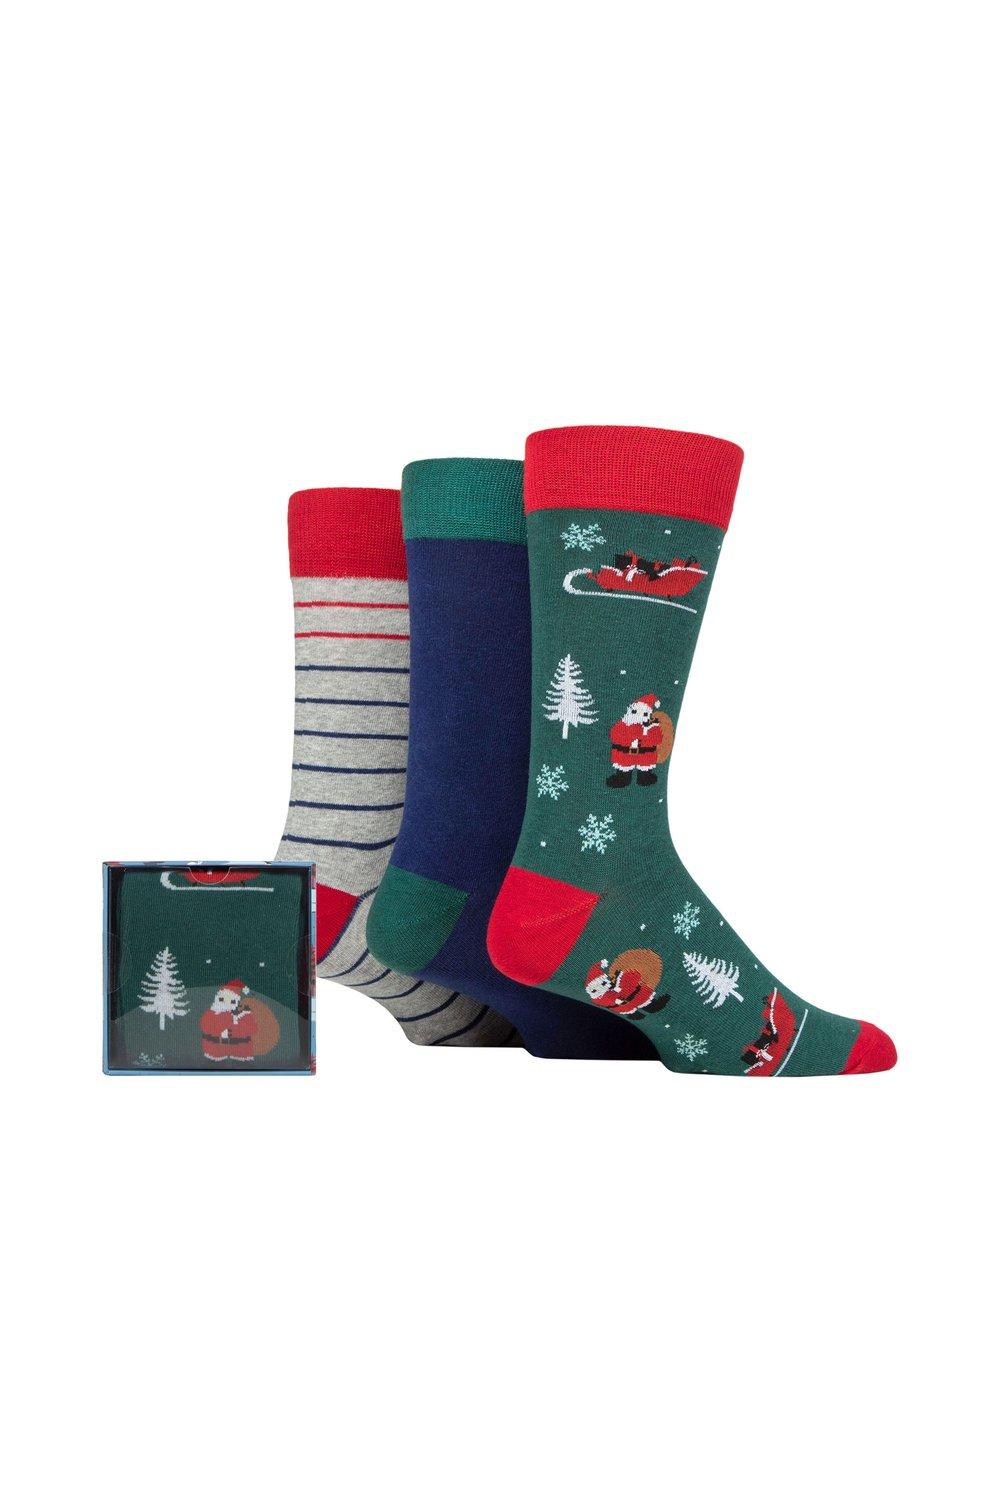 sirett dawn winter wonderland 3 пары носков в подарочной упаковке Winter Wonderland Christmas Cube SOCKSHOP Wild Feet, мультиколор